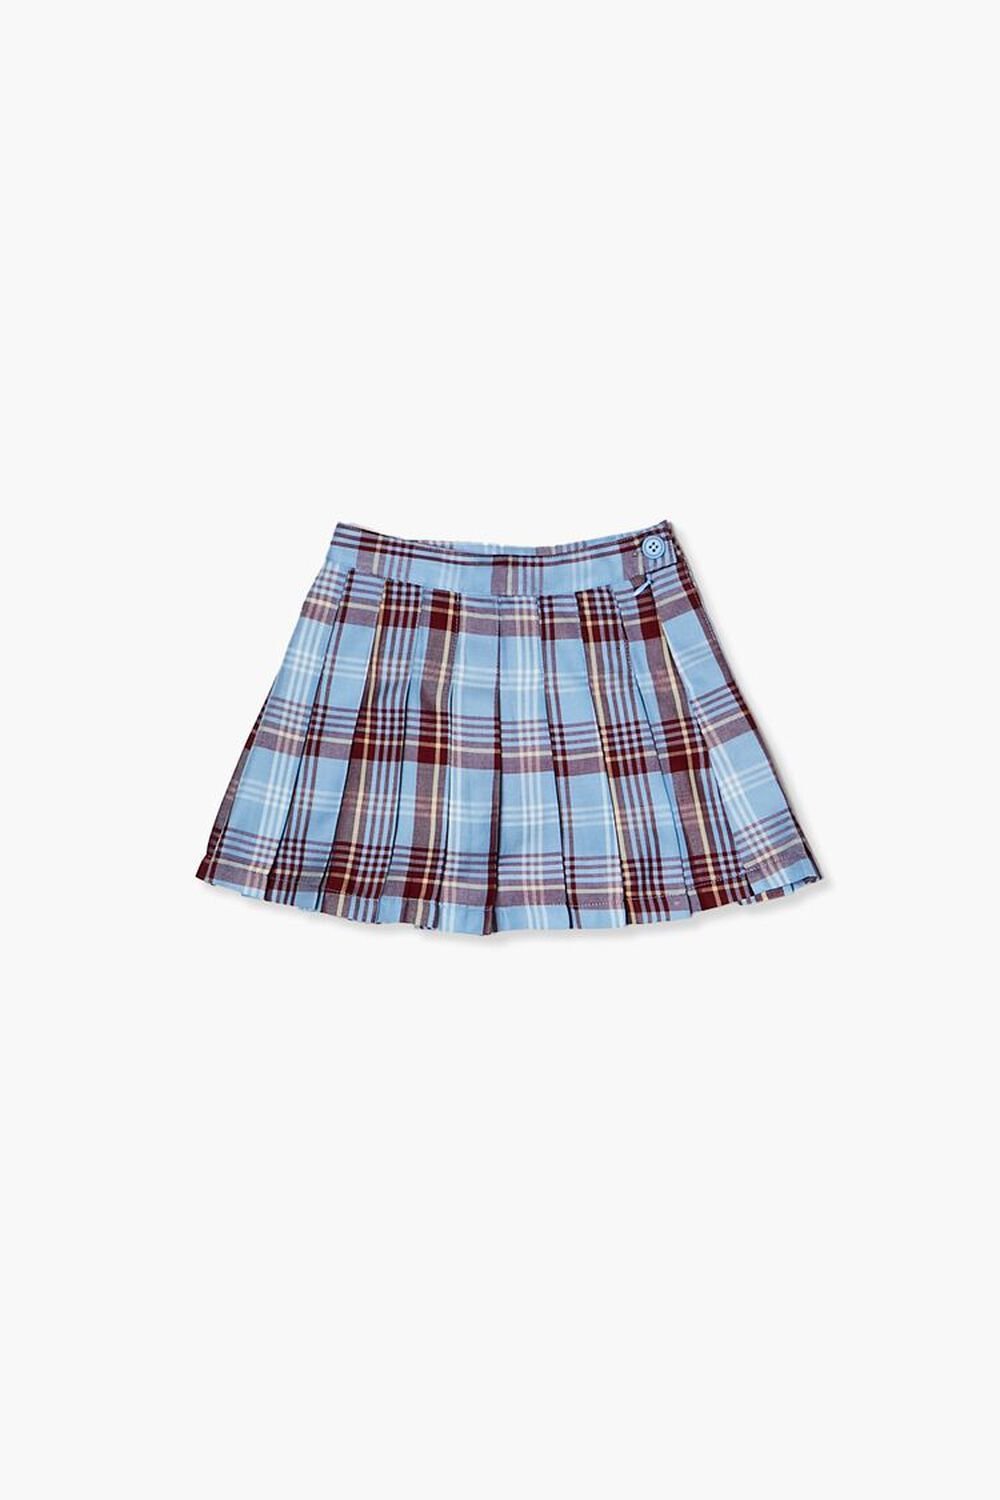 BLUE/MULTI Girls Plaid A-Line Skirt (Kids), image 1